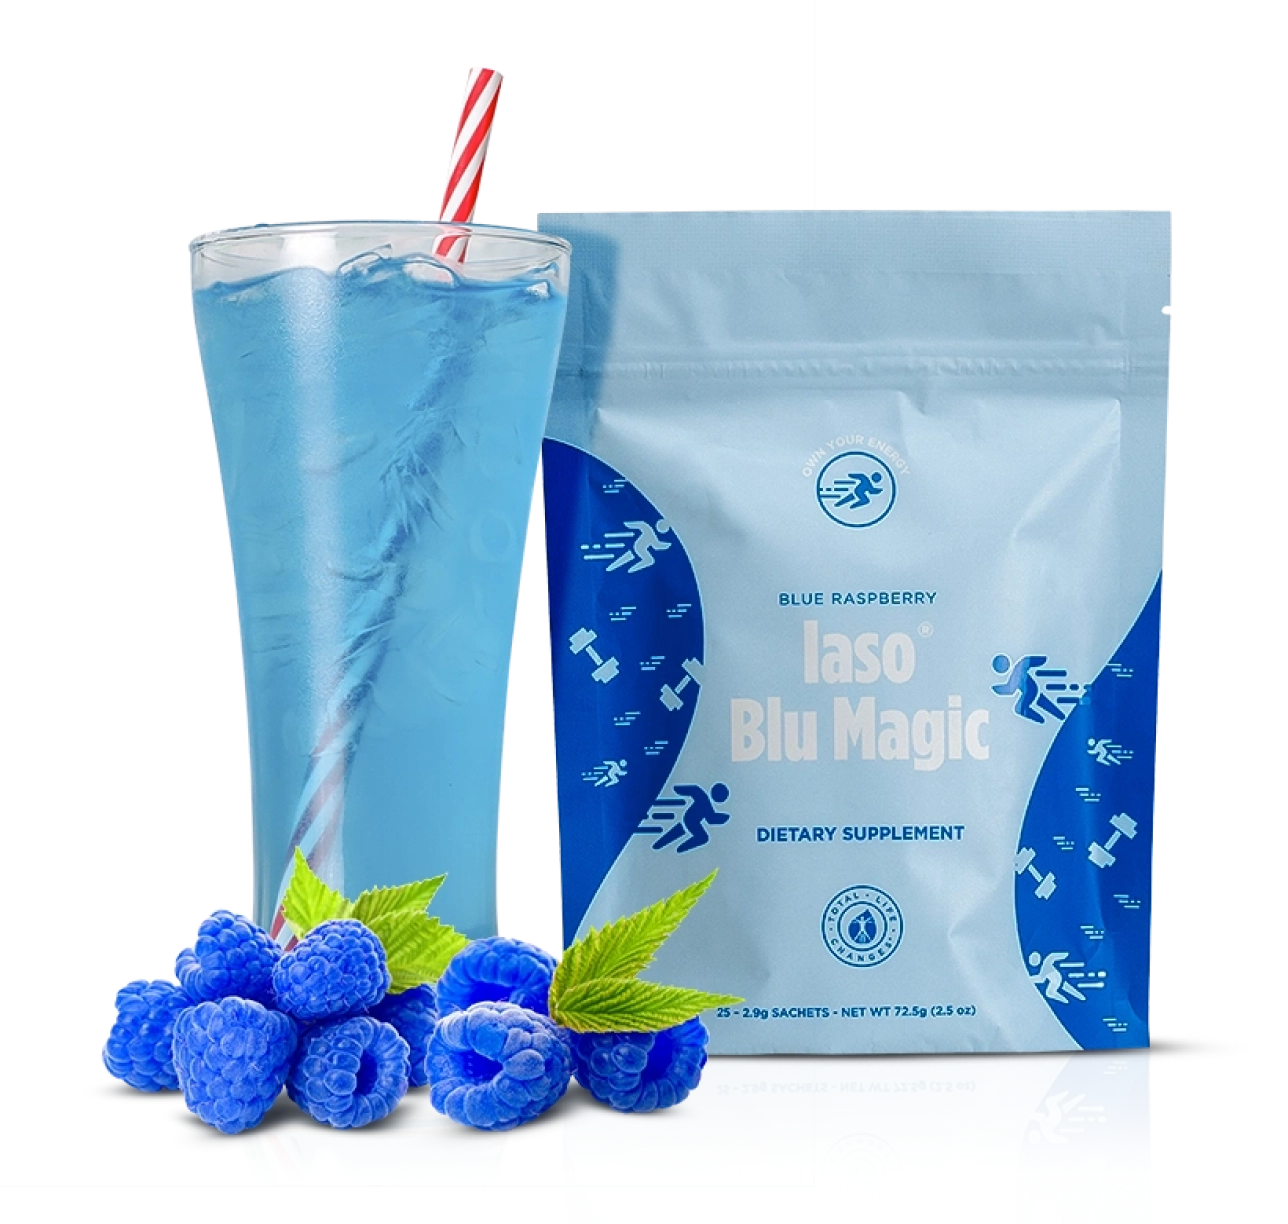 Iaso® Blu Magic Energy Drink - Total Life Changes